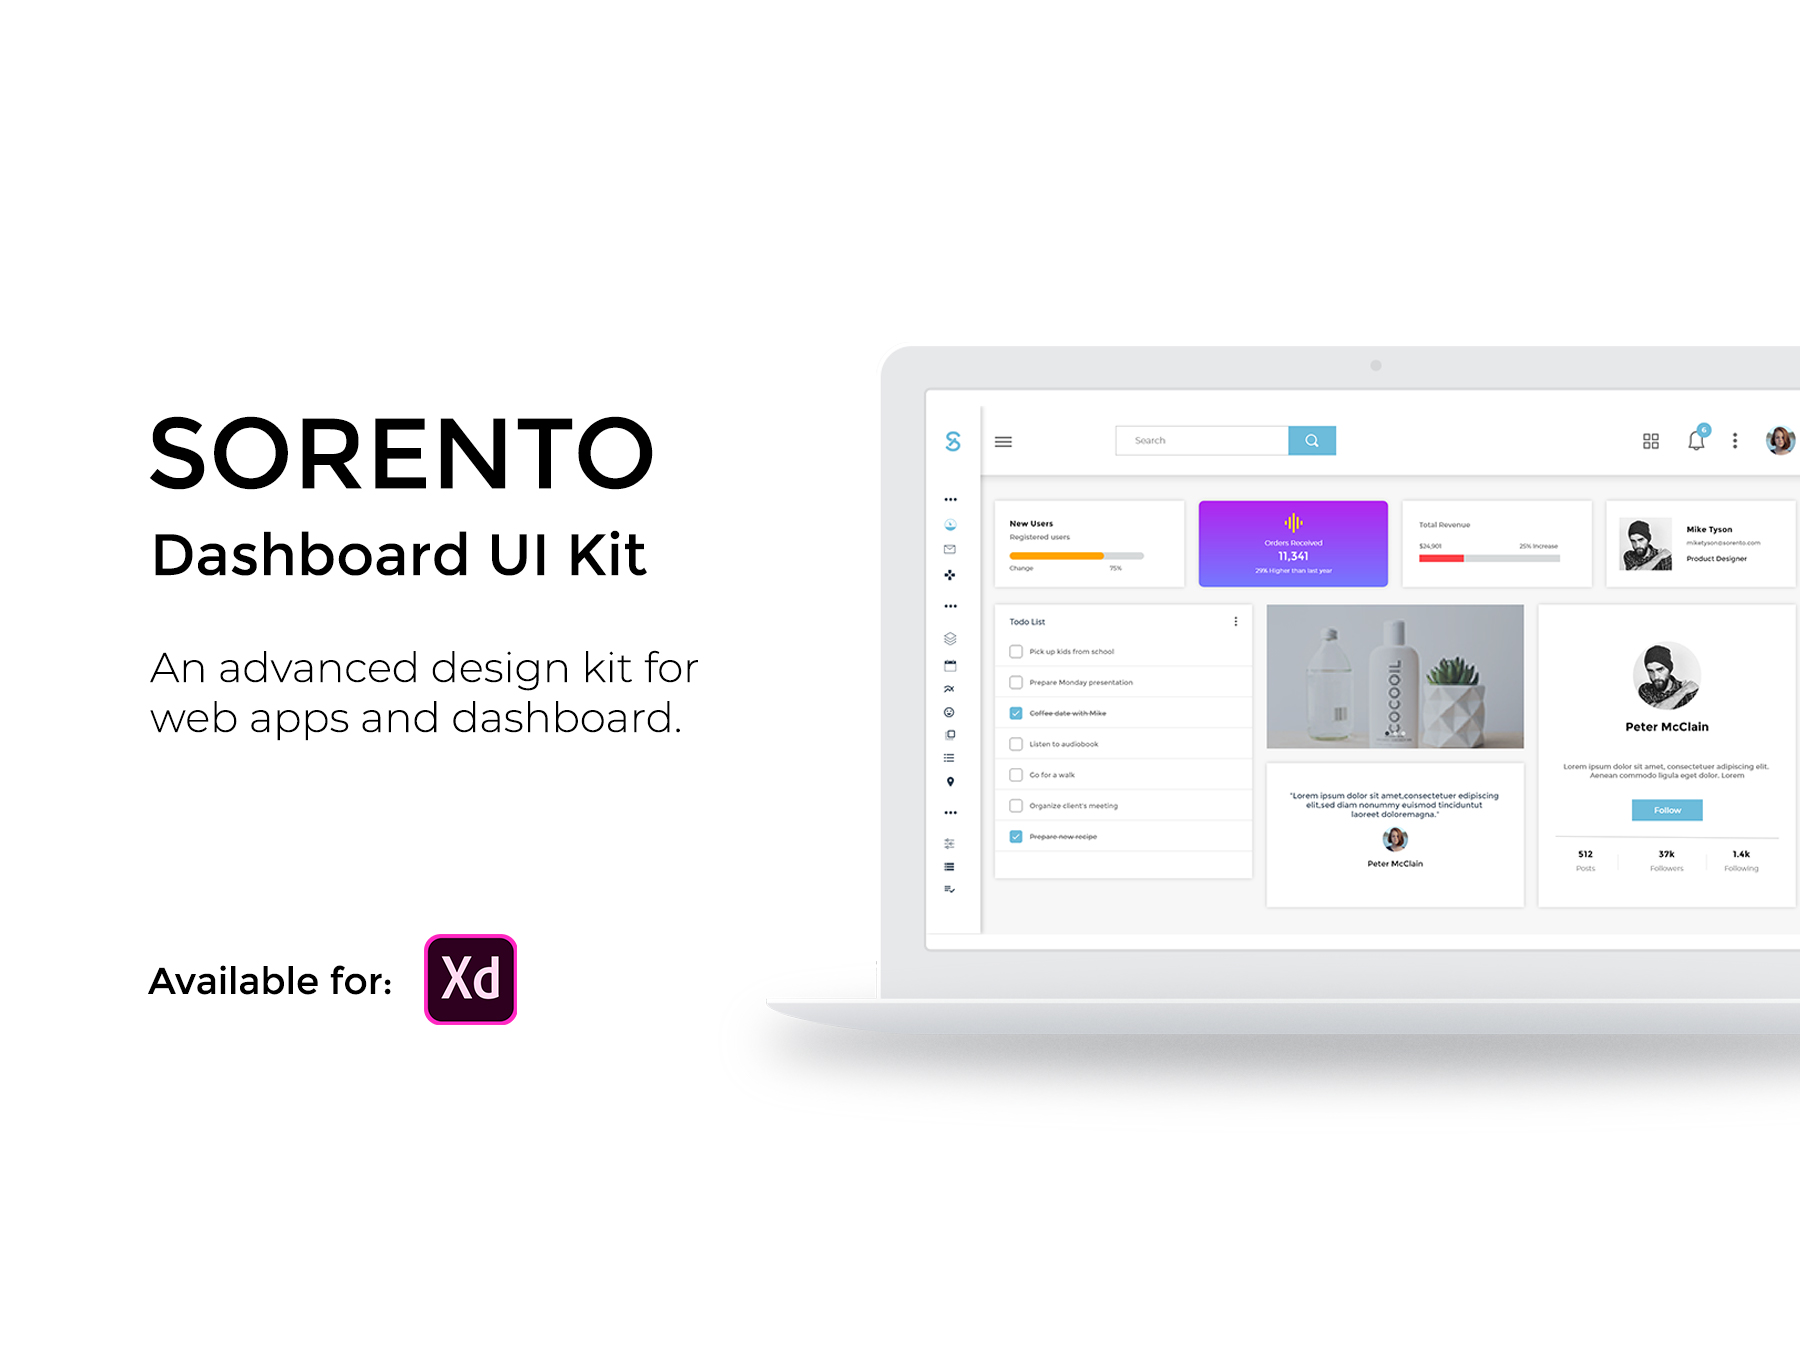 仪表板用户界面工具包Sorento Dashboard UI